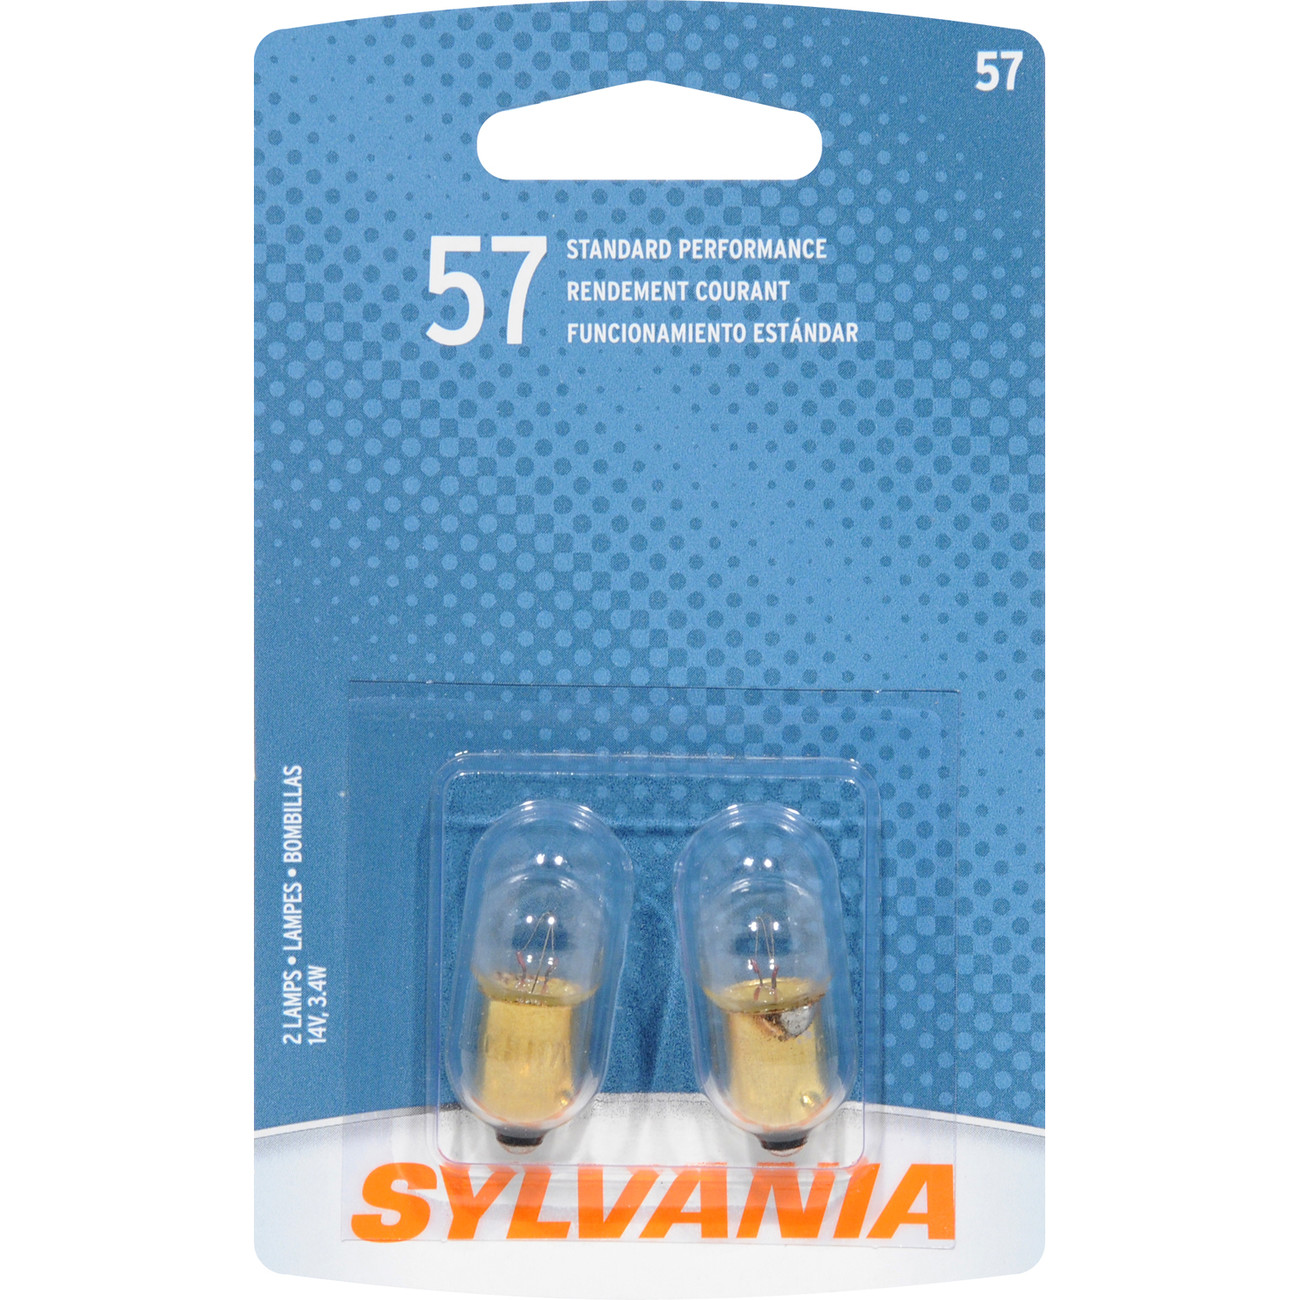 SYLVANIA RETAIL PACKS - Blister Pack Twin Auto Trans Indicator Light Bulb - SYR 57.BP2